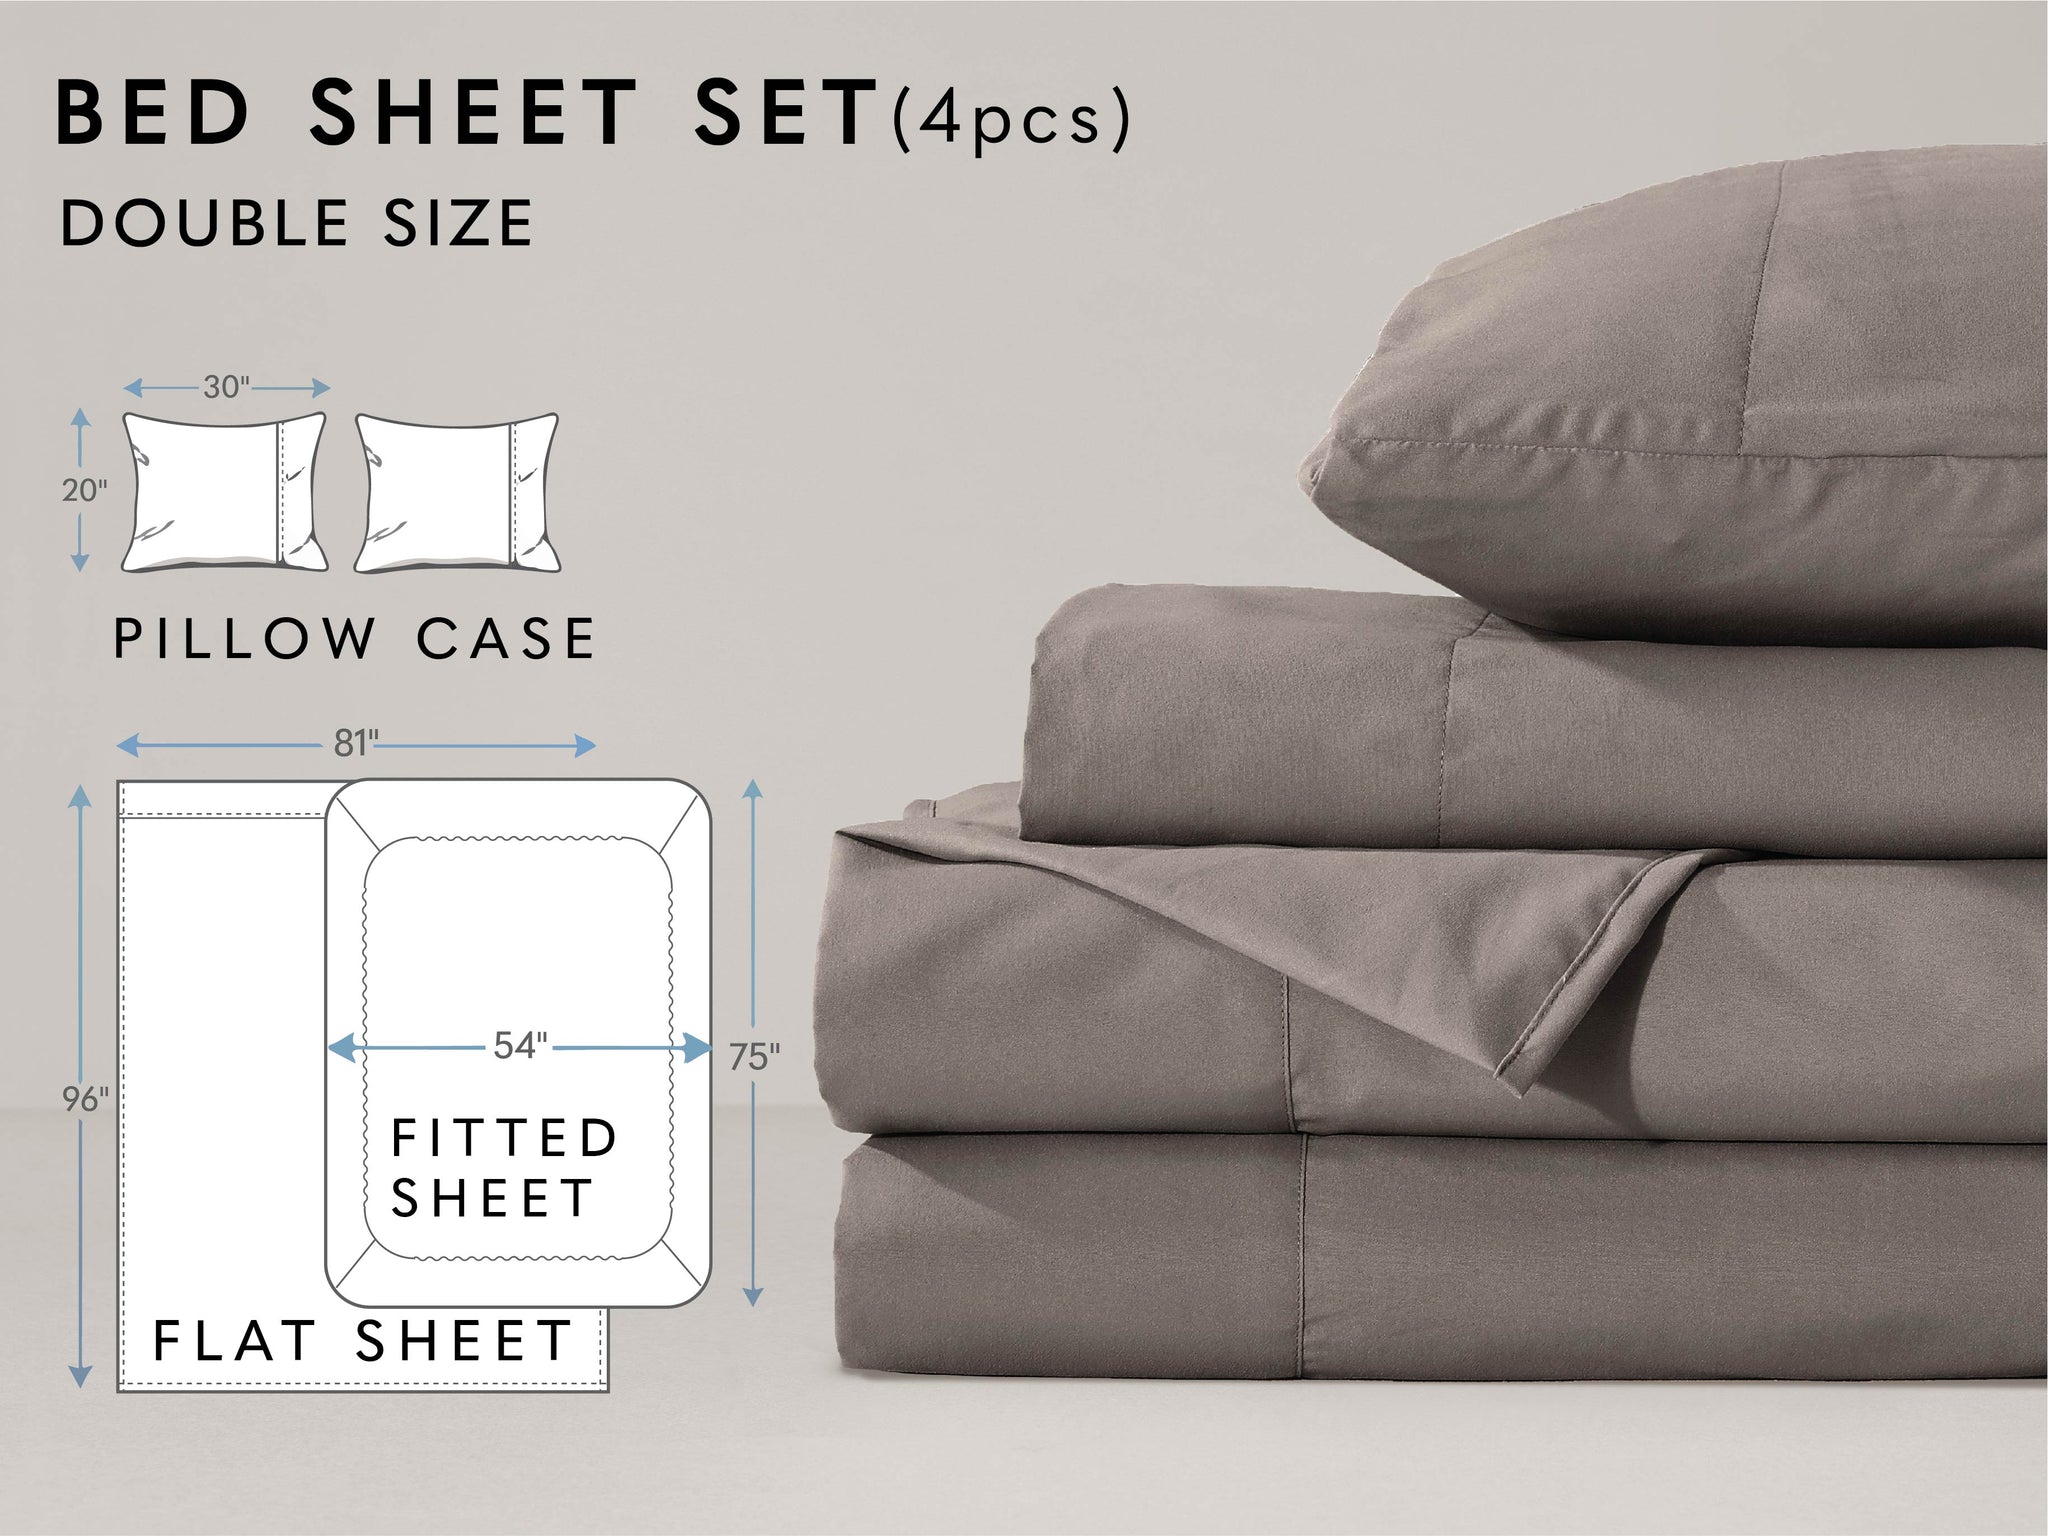 Microfiber Gray Bed Sheet 4-Piece Set